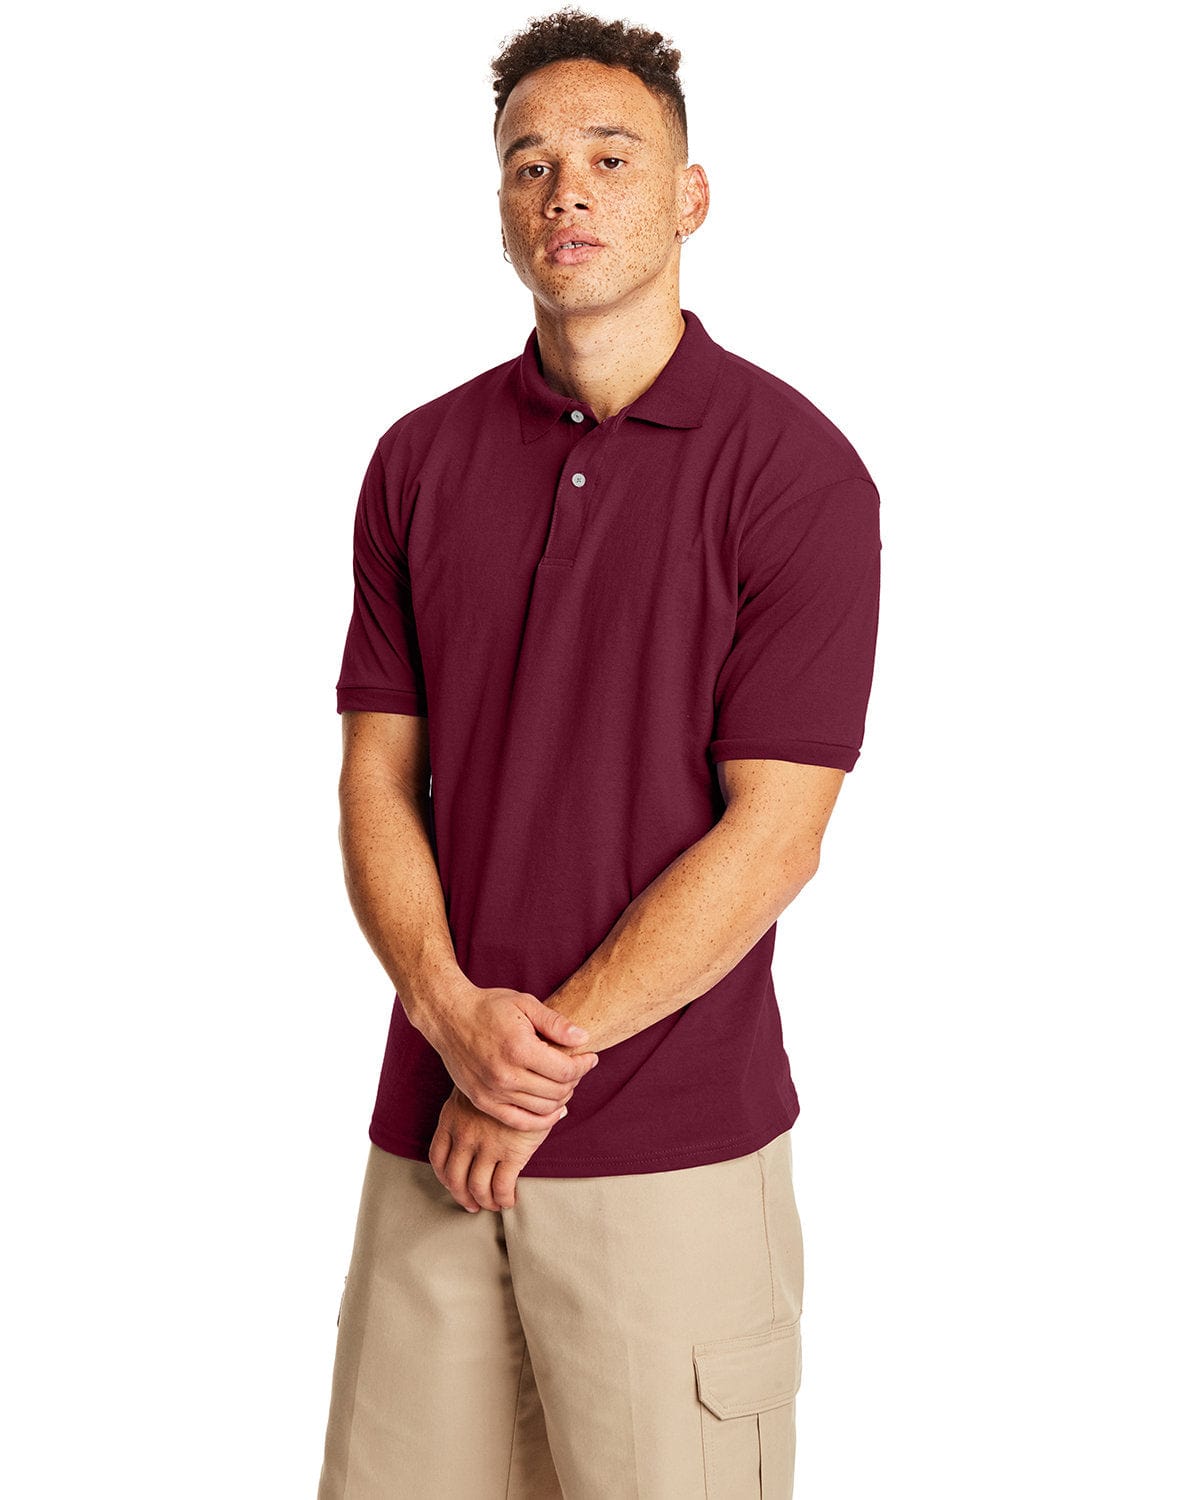 Hanes Men's Short-Sleeve Jersey Pocket Polo